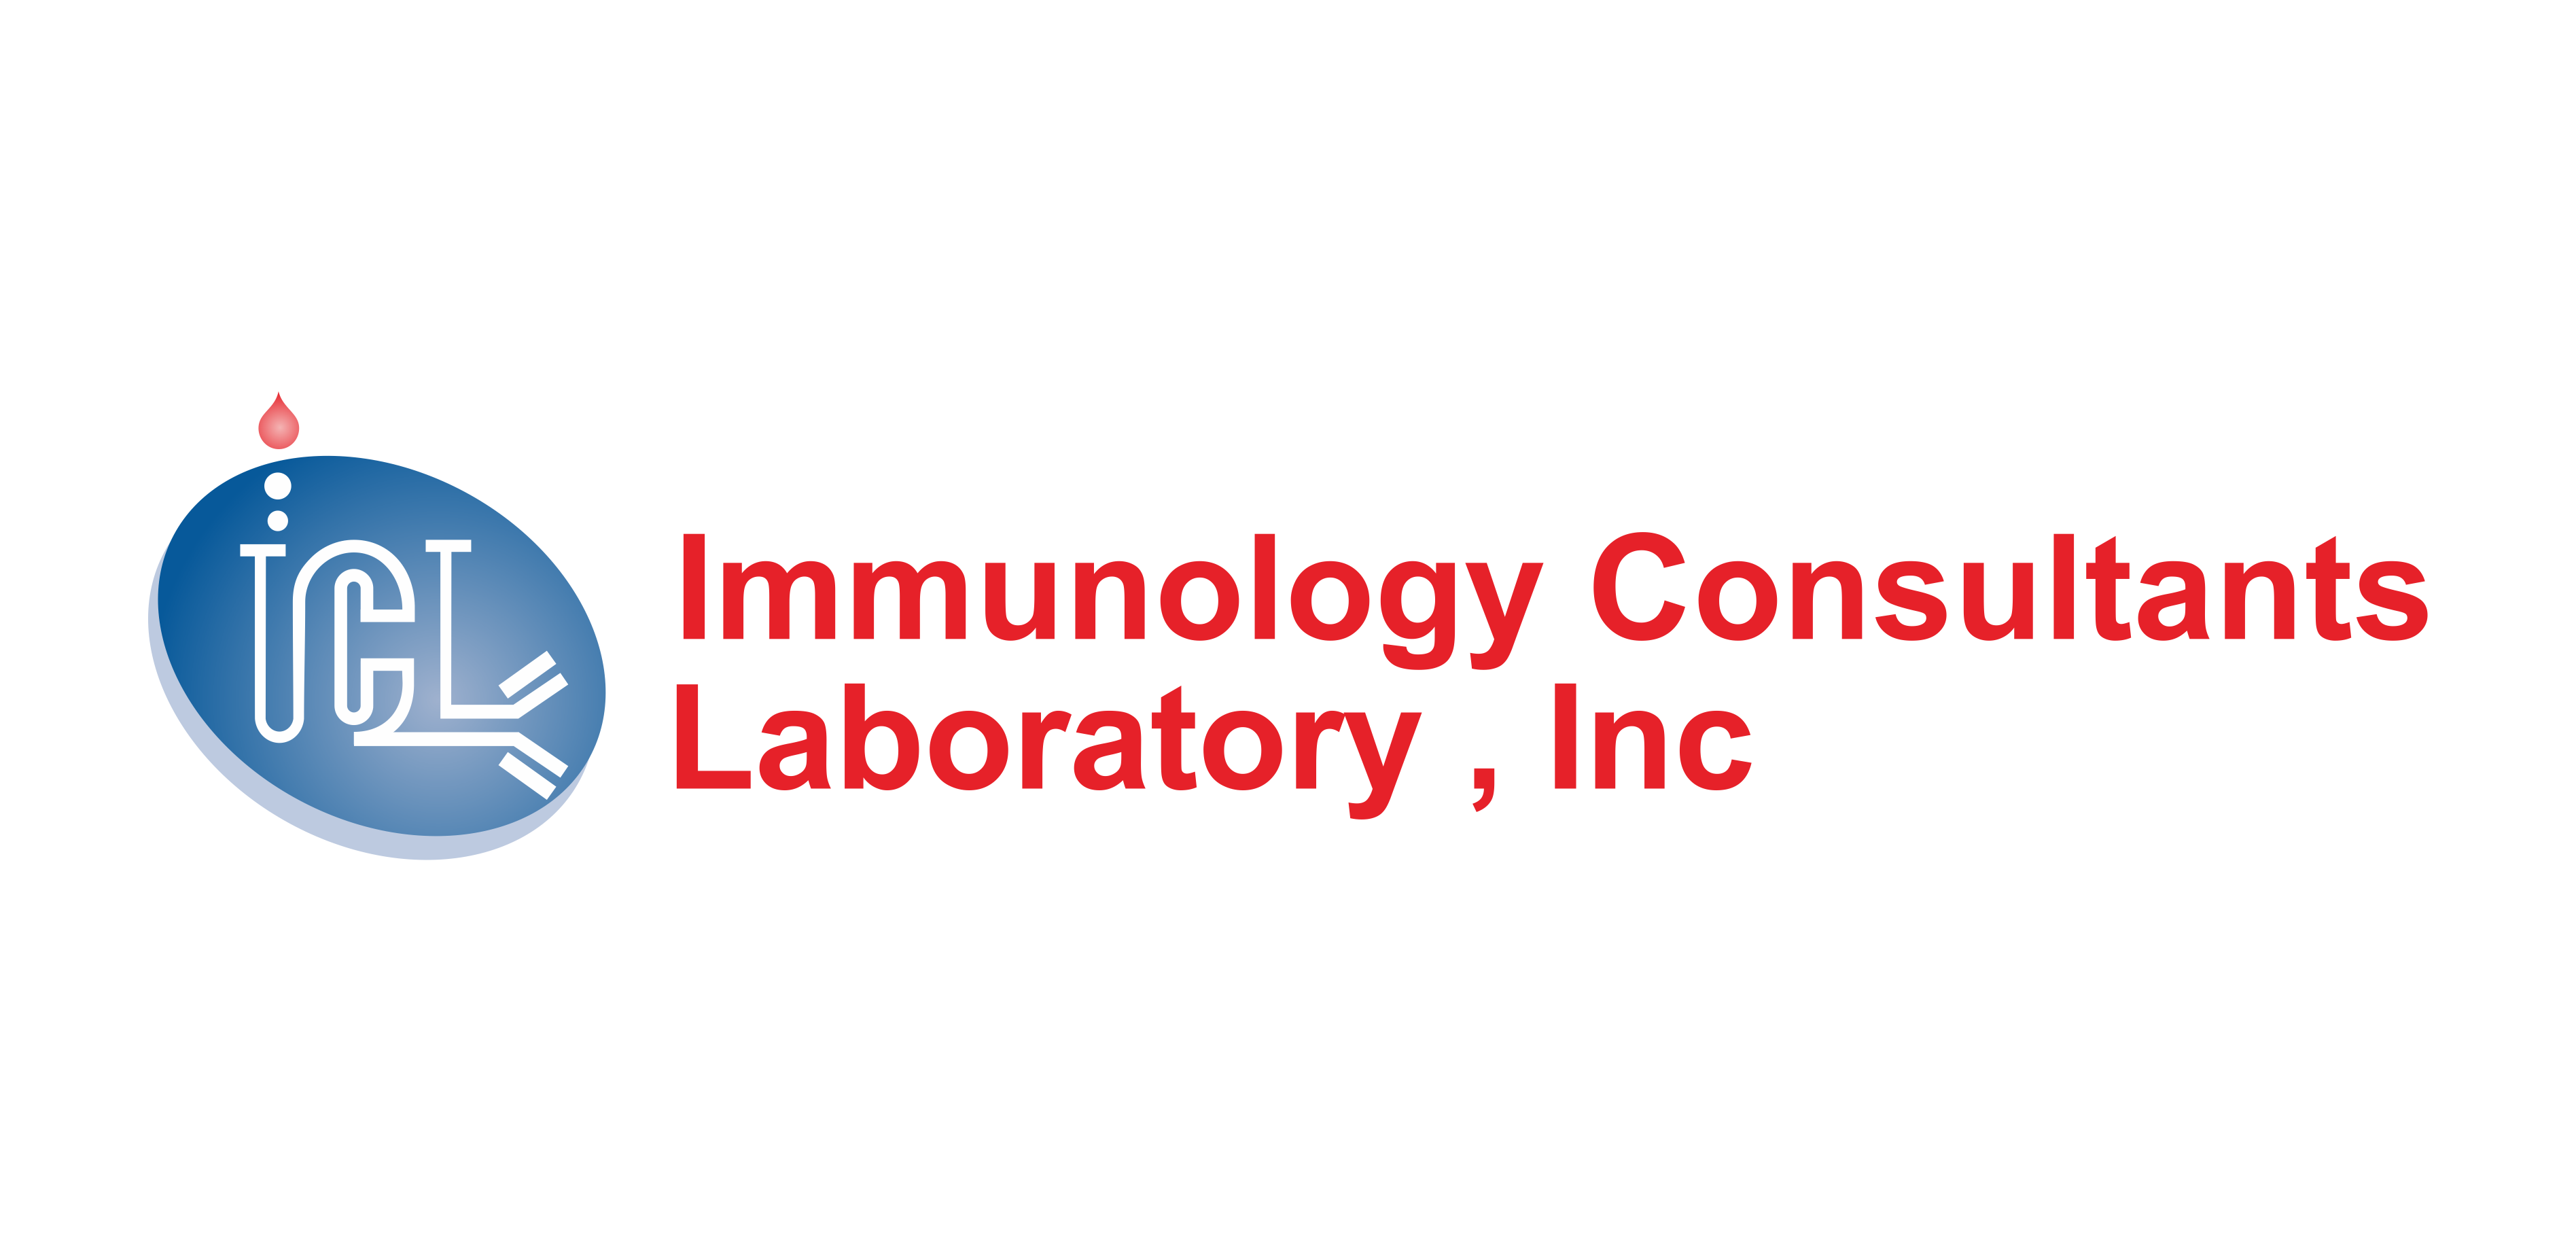 Immunology Consultants Laboratory